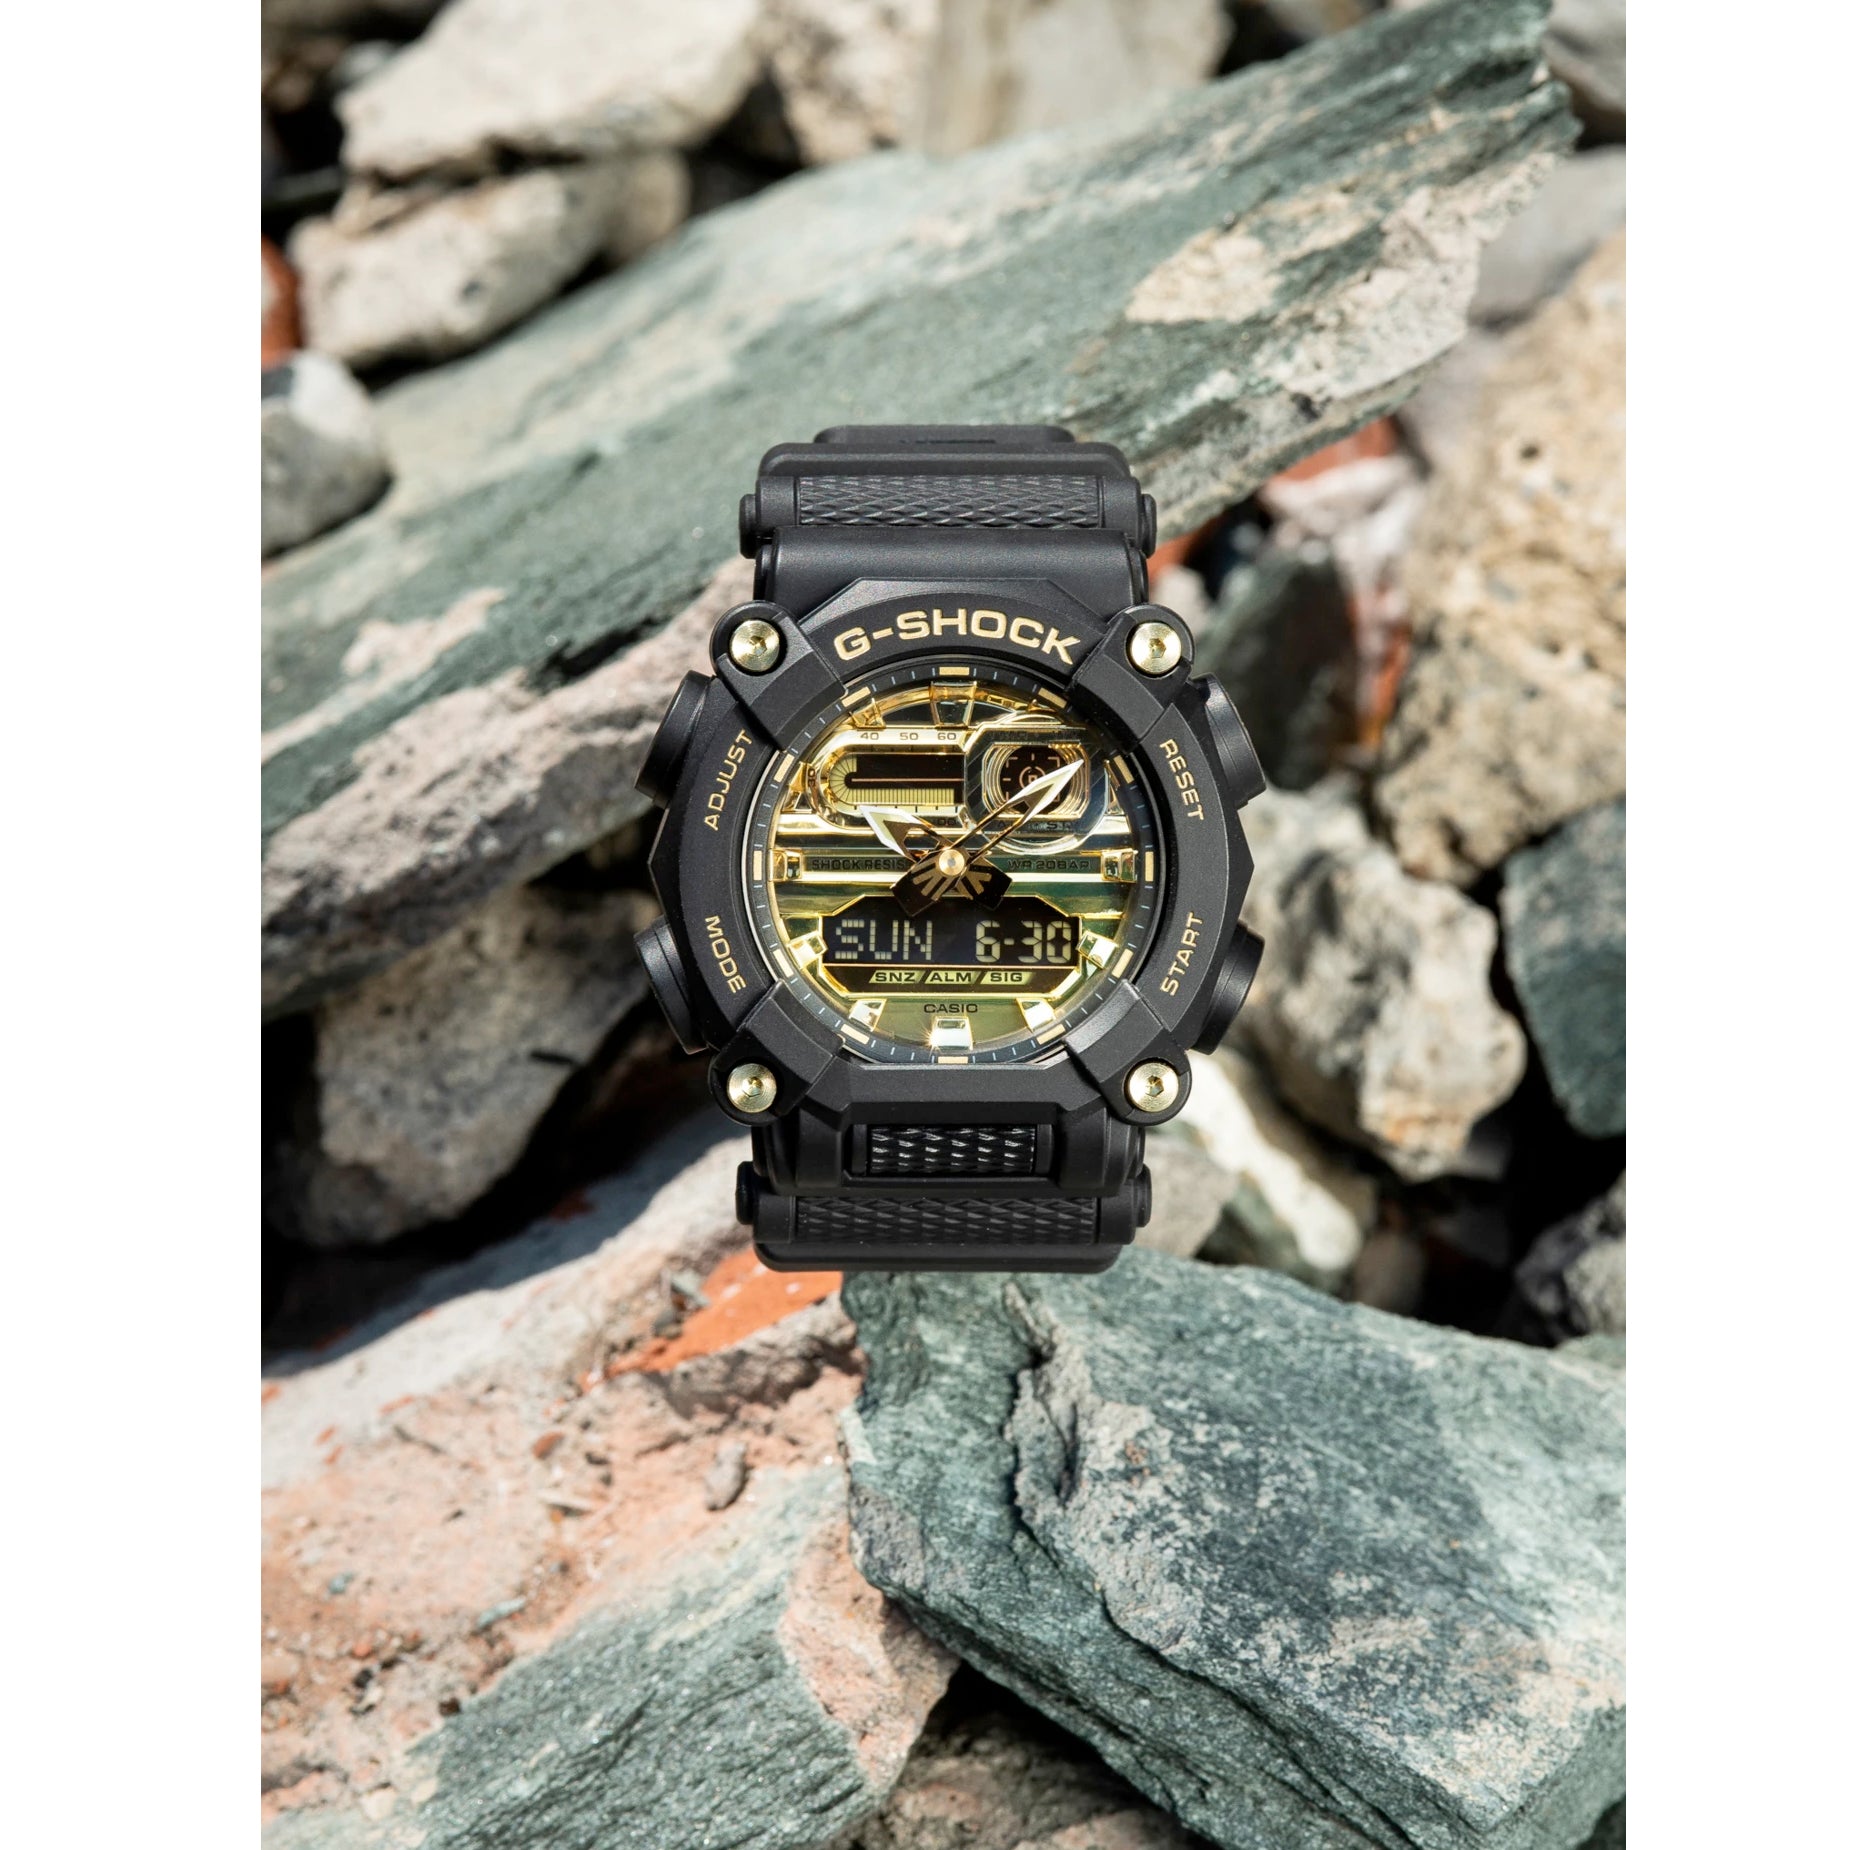 F91WM-9A | Gold and Black Digital Watch | CASIO